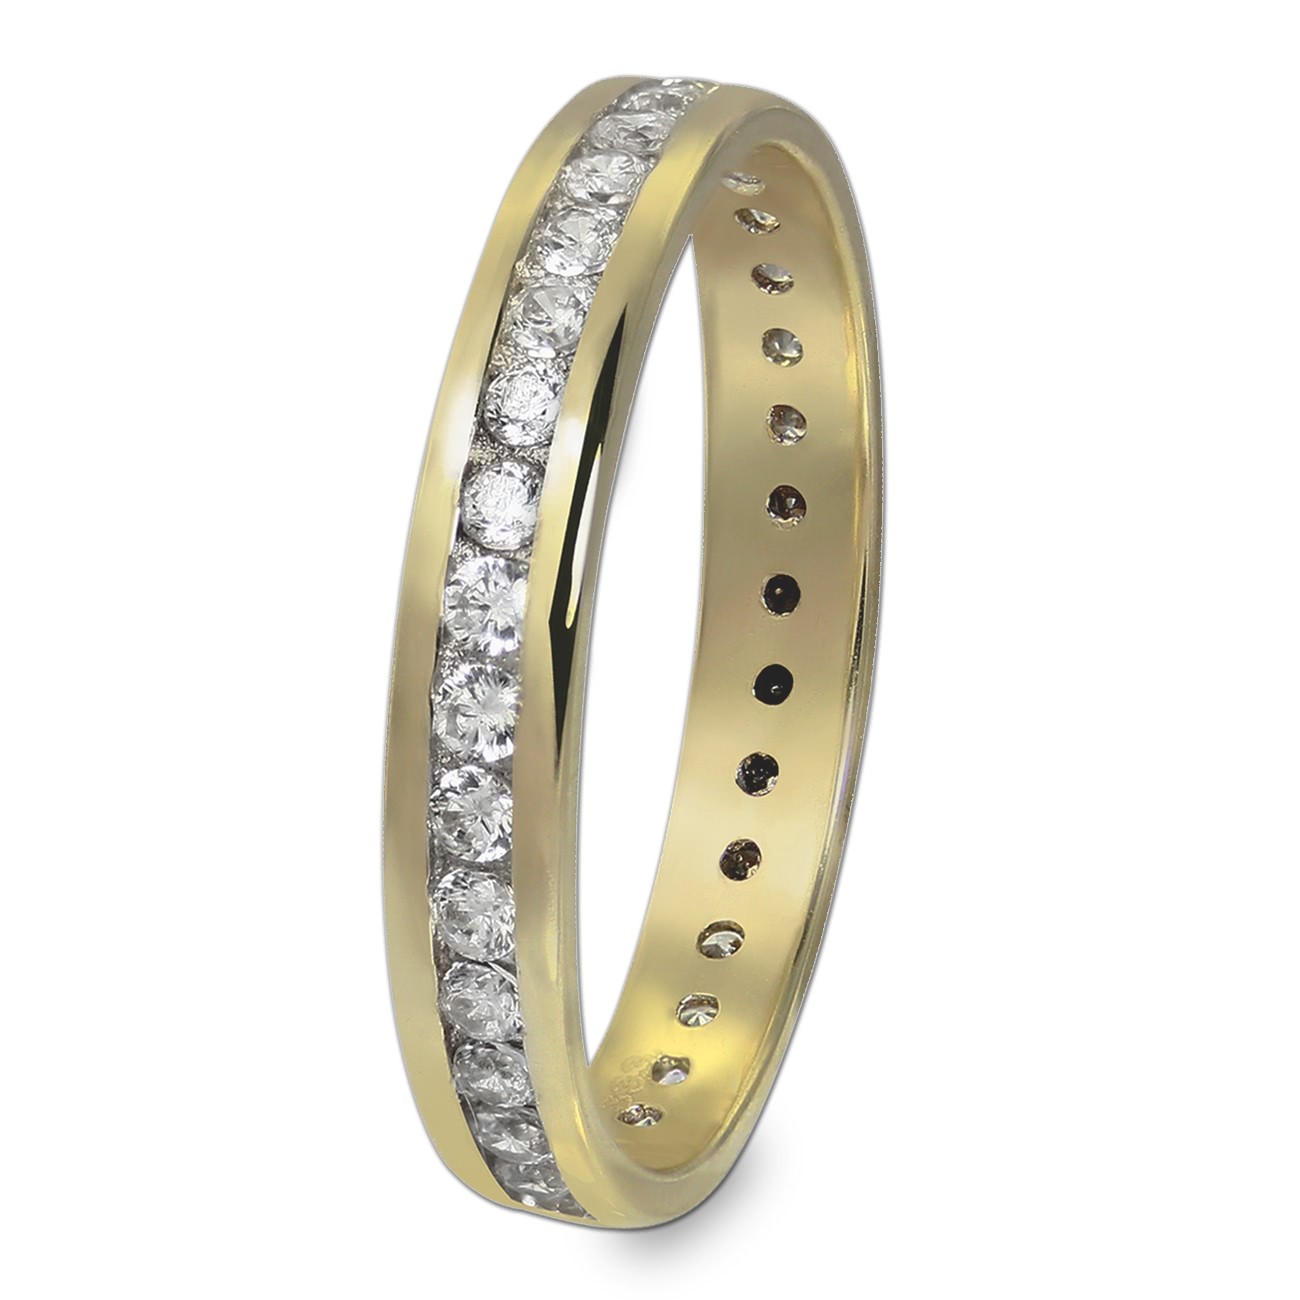 GoldDream Gold Ring Gr.58 Zirkonia weiß 333er Gelbgold GDR520Y58